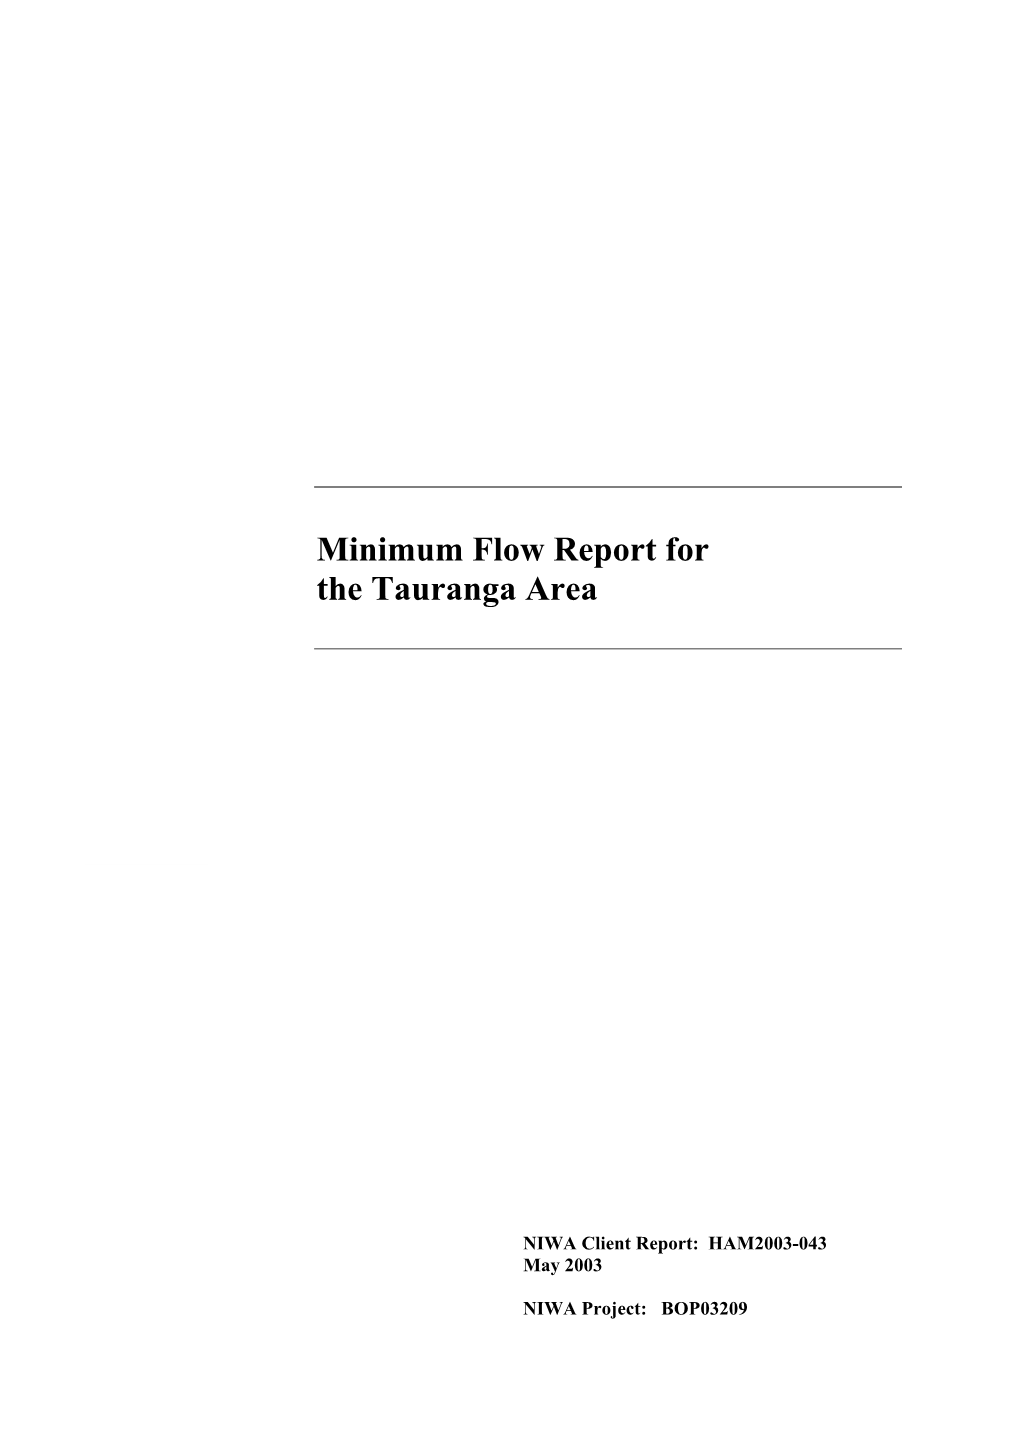 Minimum Flow Report for the Tauranga Area